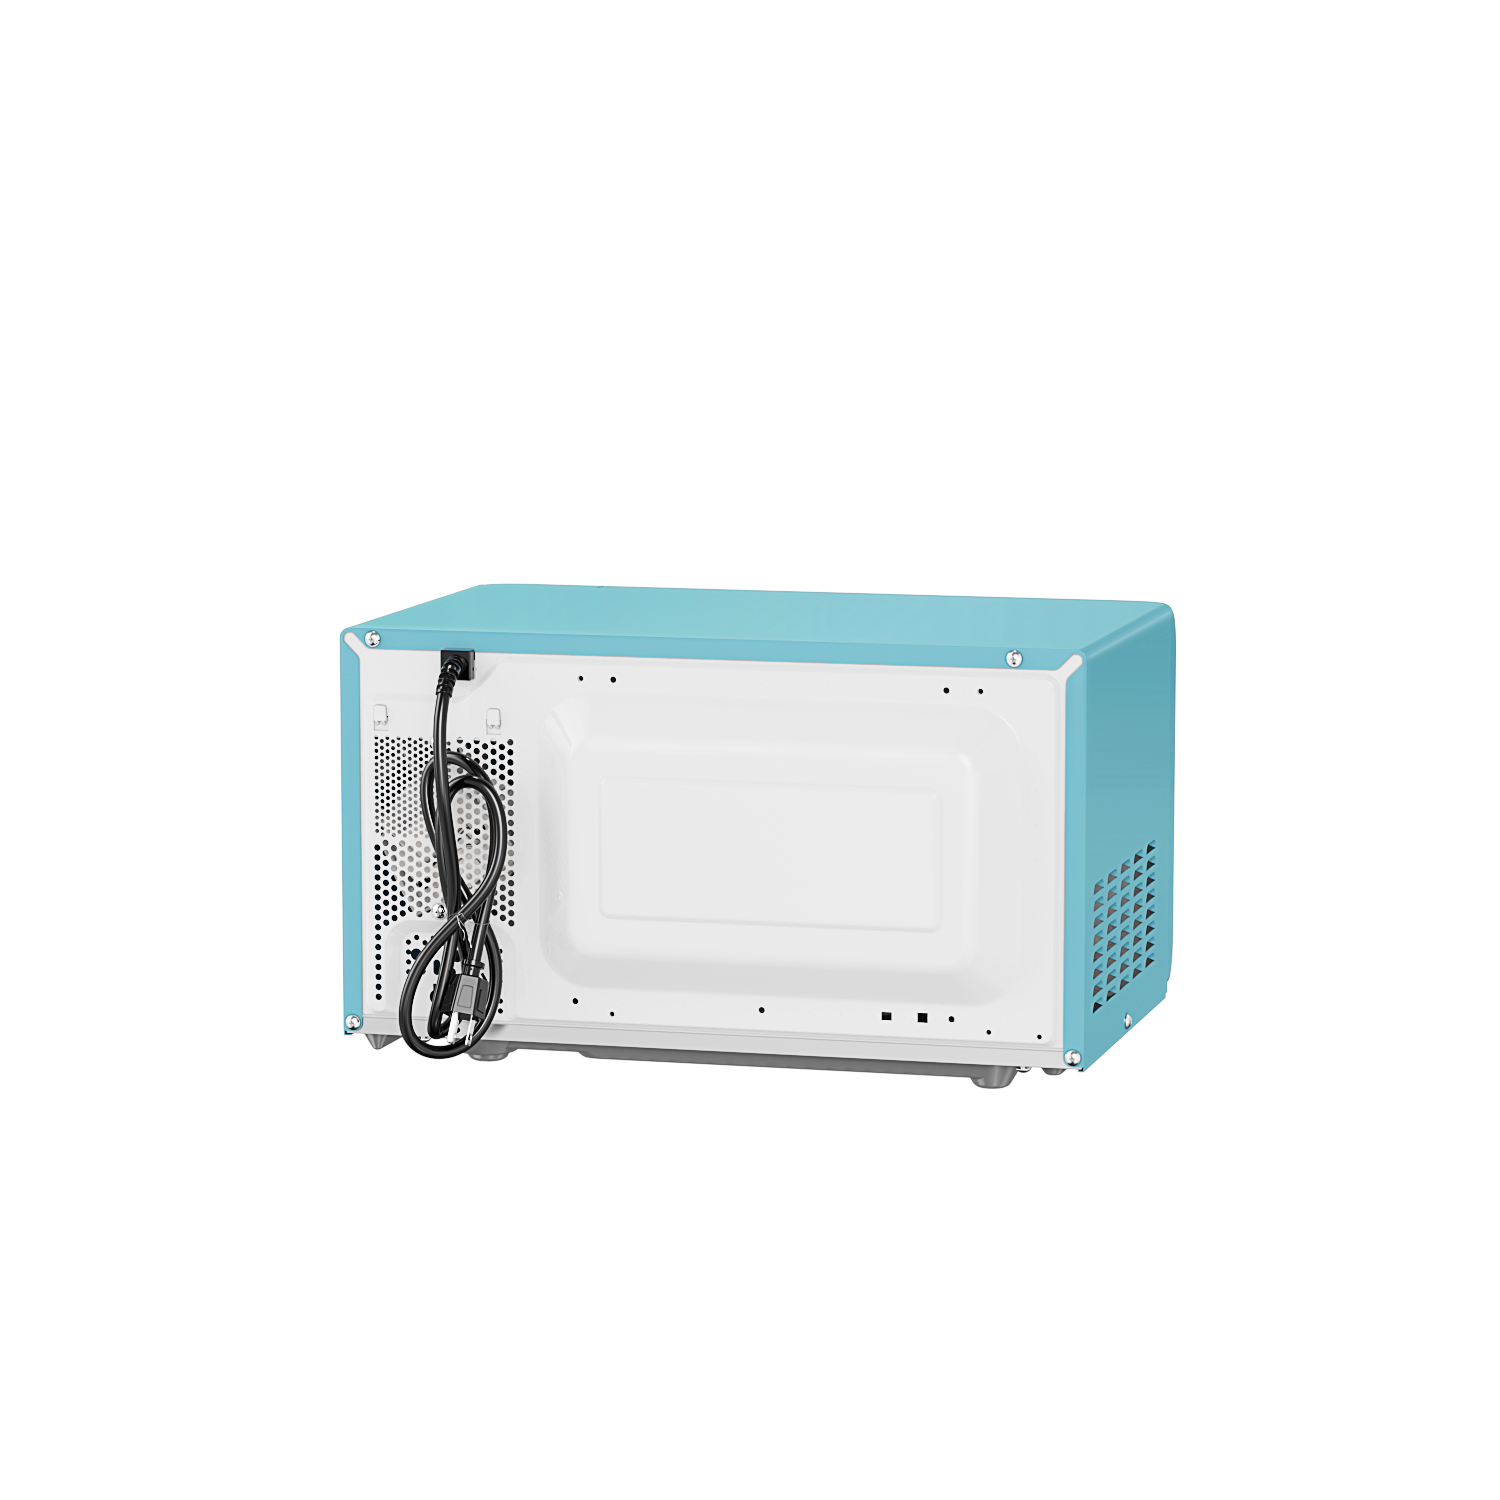 GLCMKA07BER07 by Galanz - Galanz 0.7 Cu Ft Retro Microwave Oven in Bebop  Blue